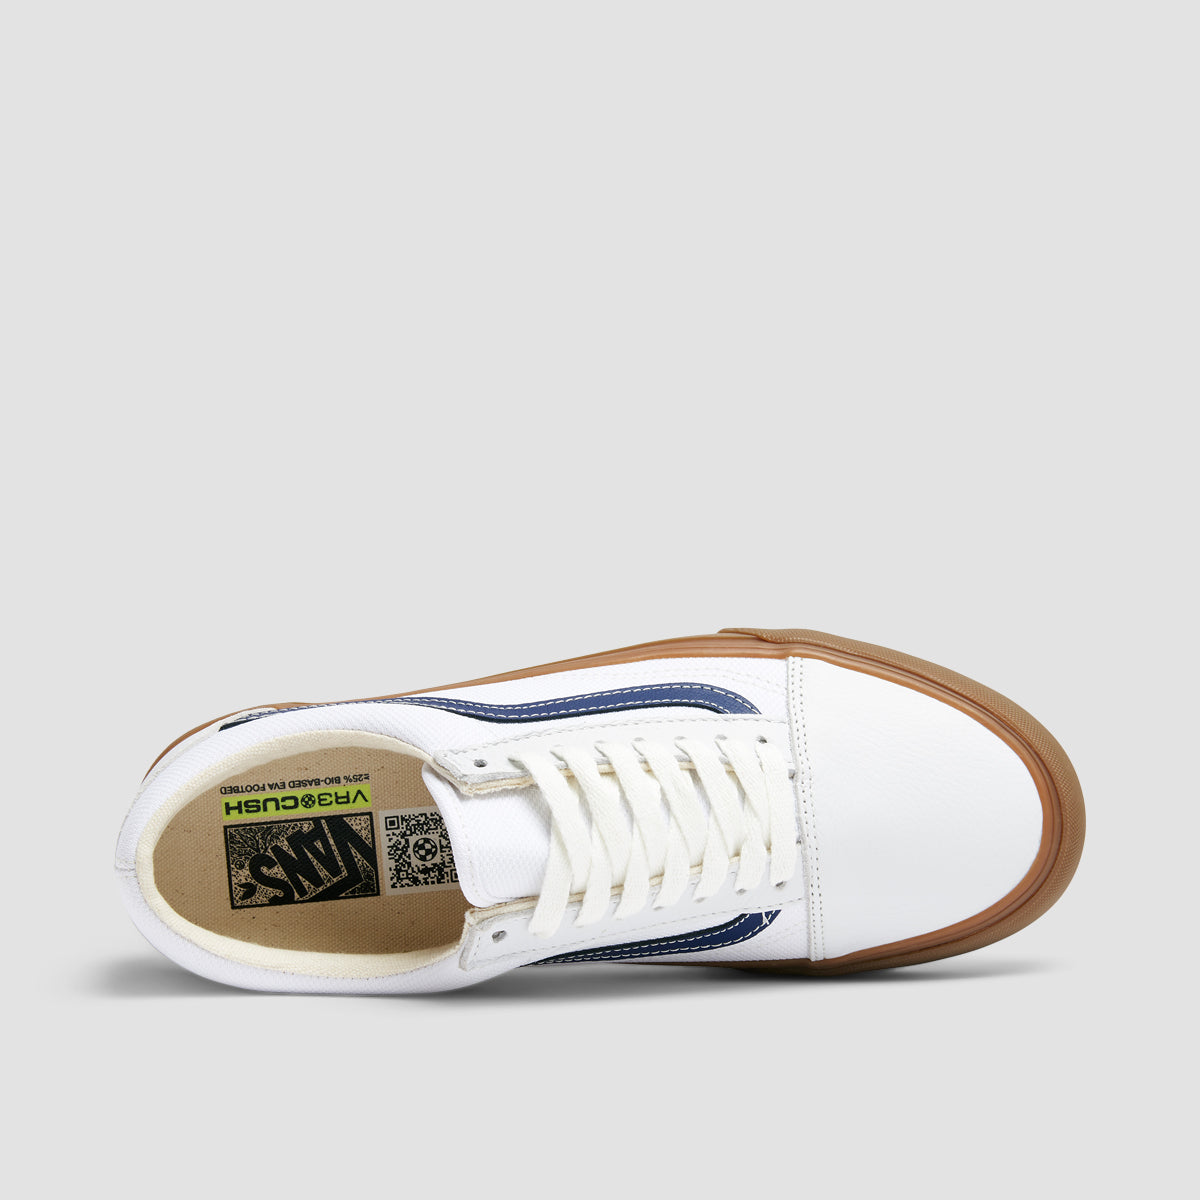 Vans Old Skool VR3 Shoes - Mesh White/Navy